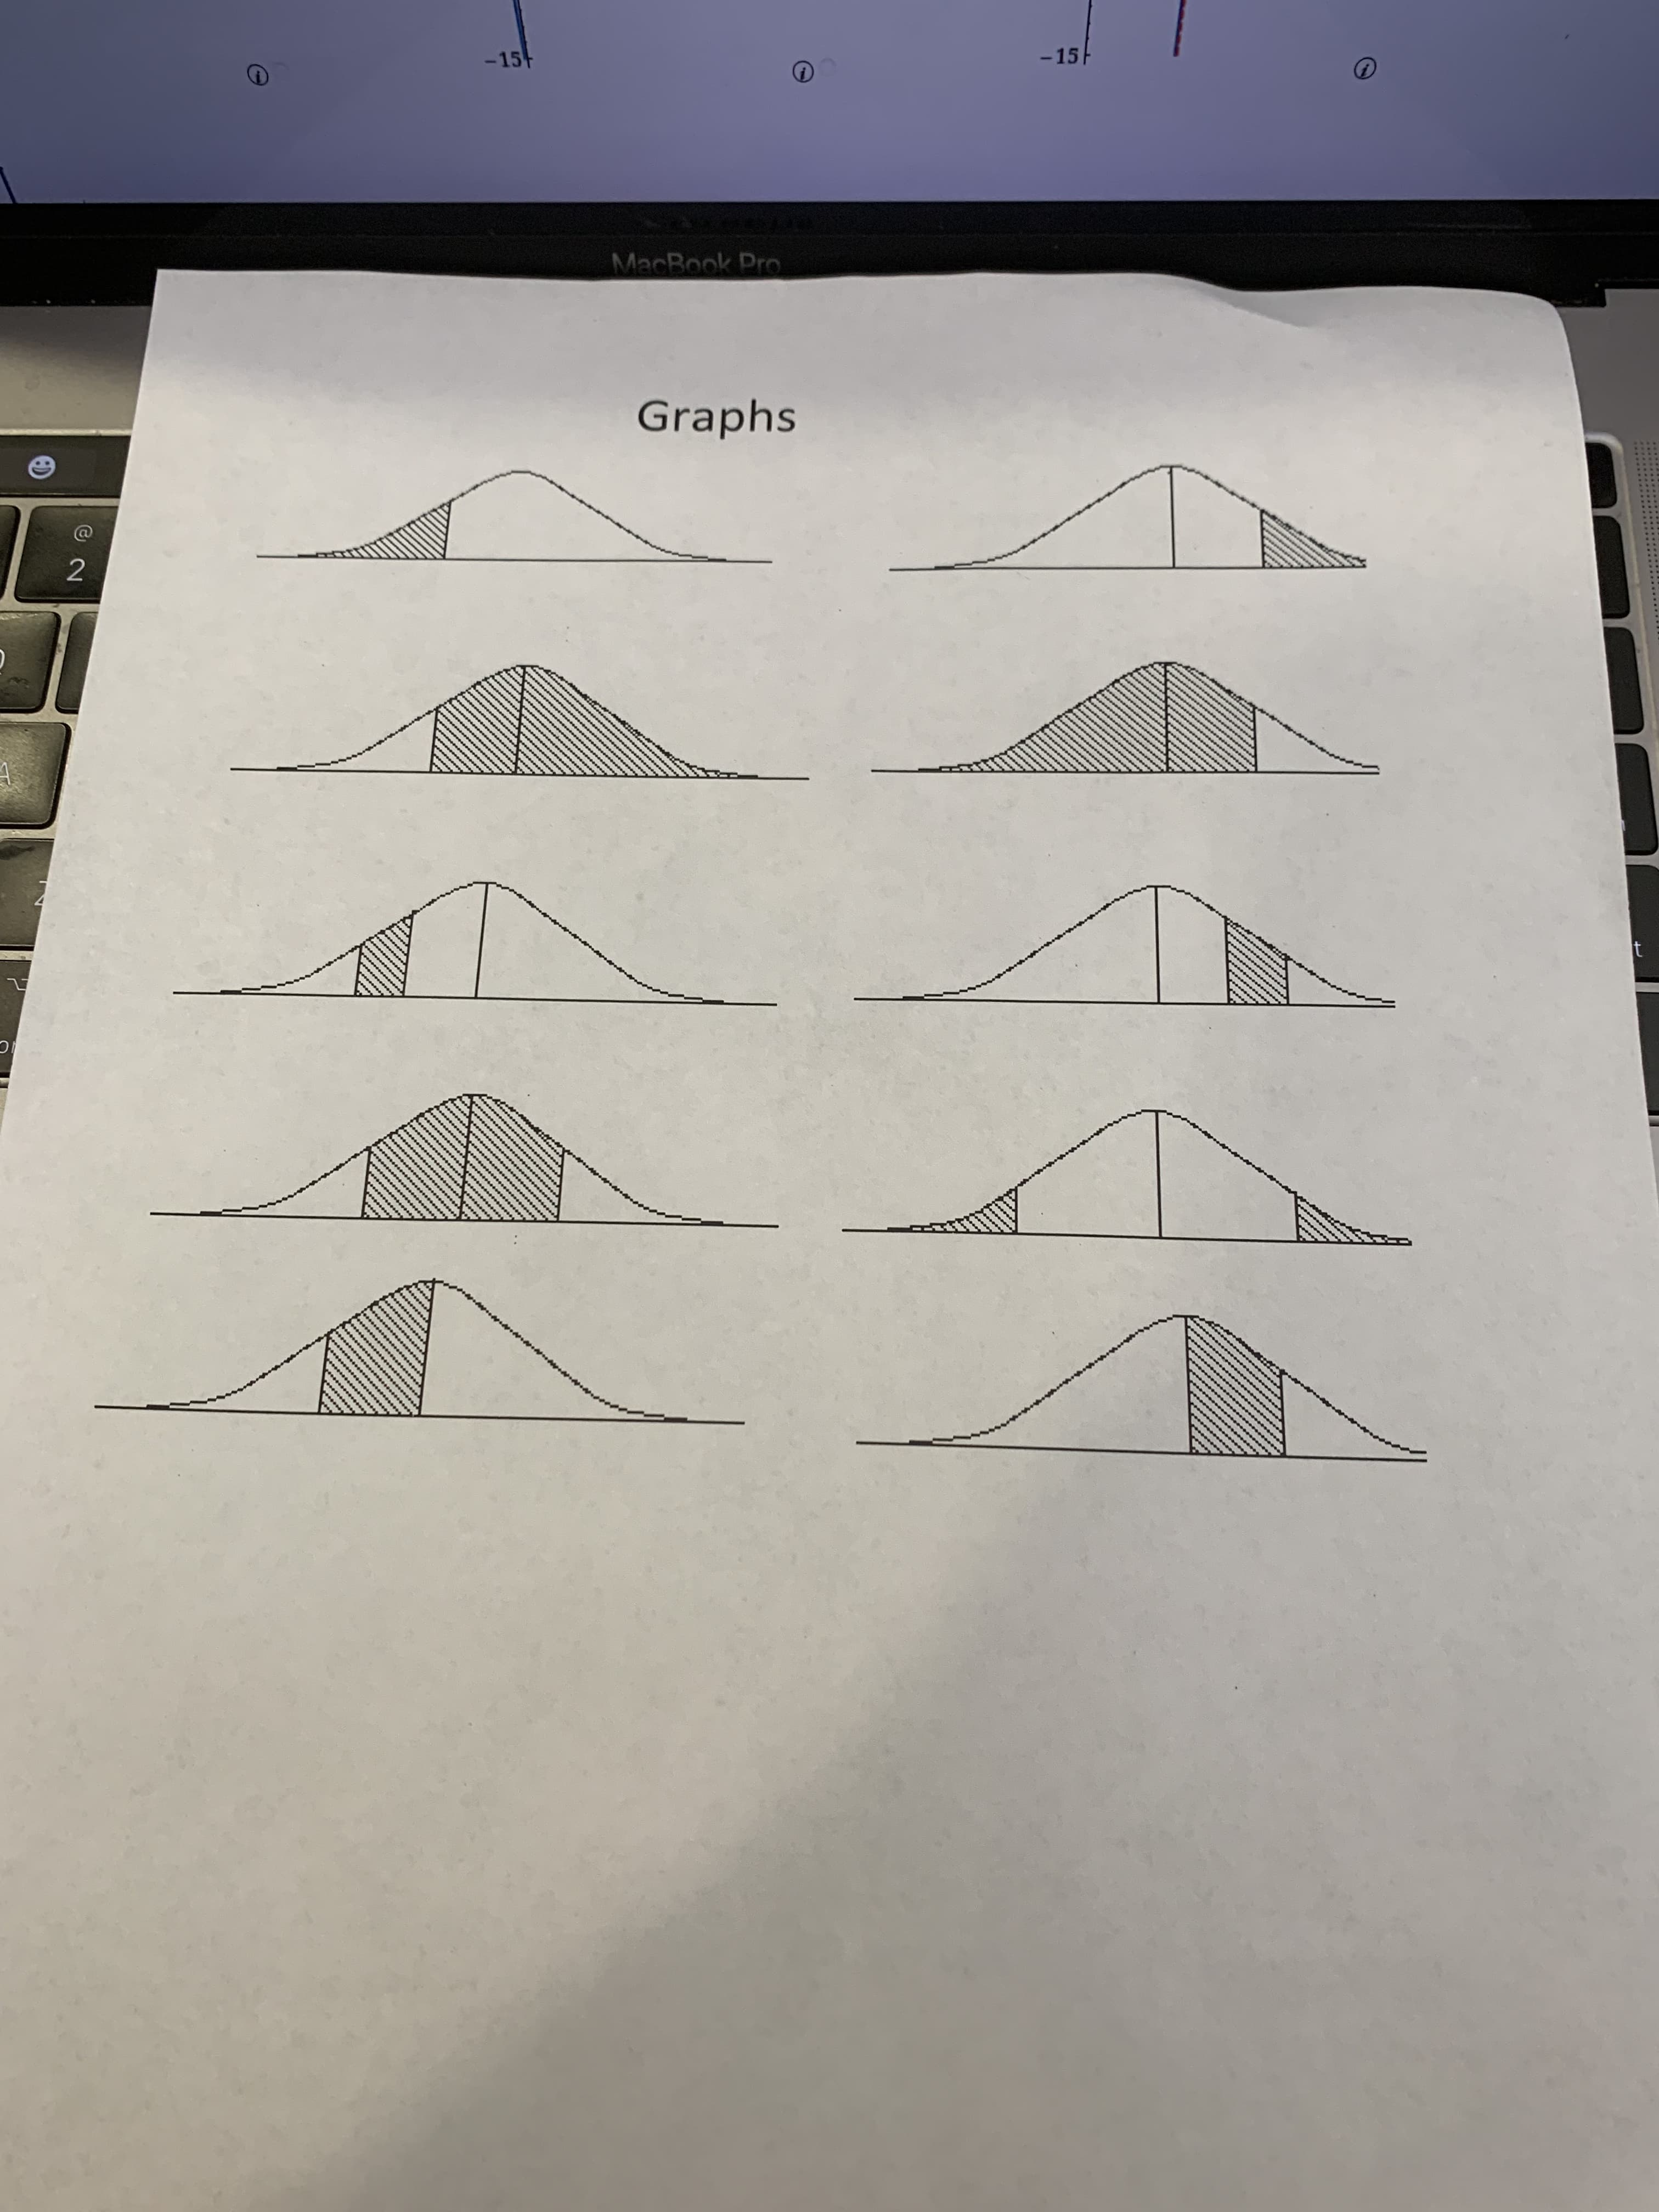 -15
-15
MacBook Pro
Graphs
2.
